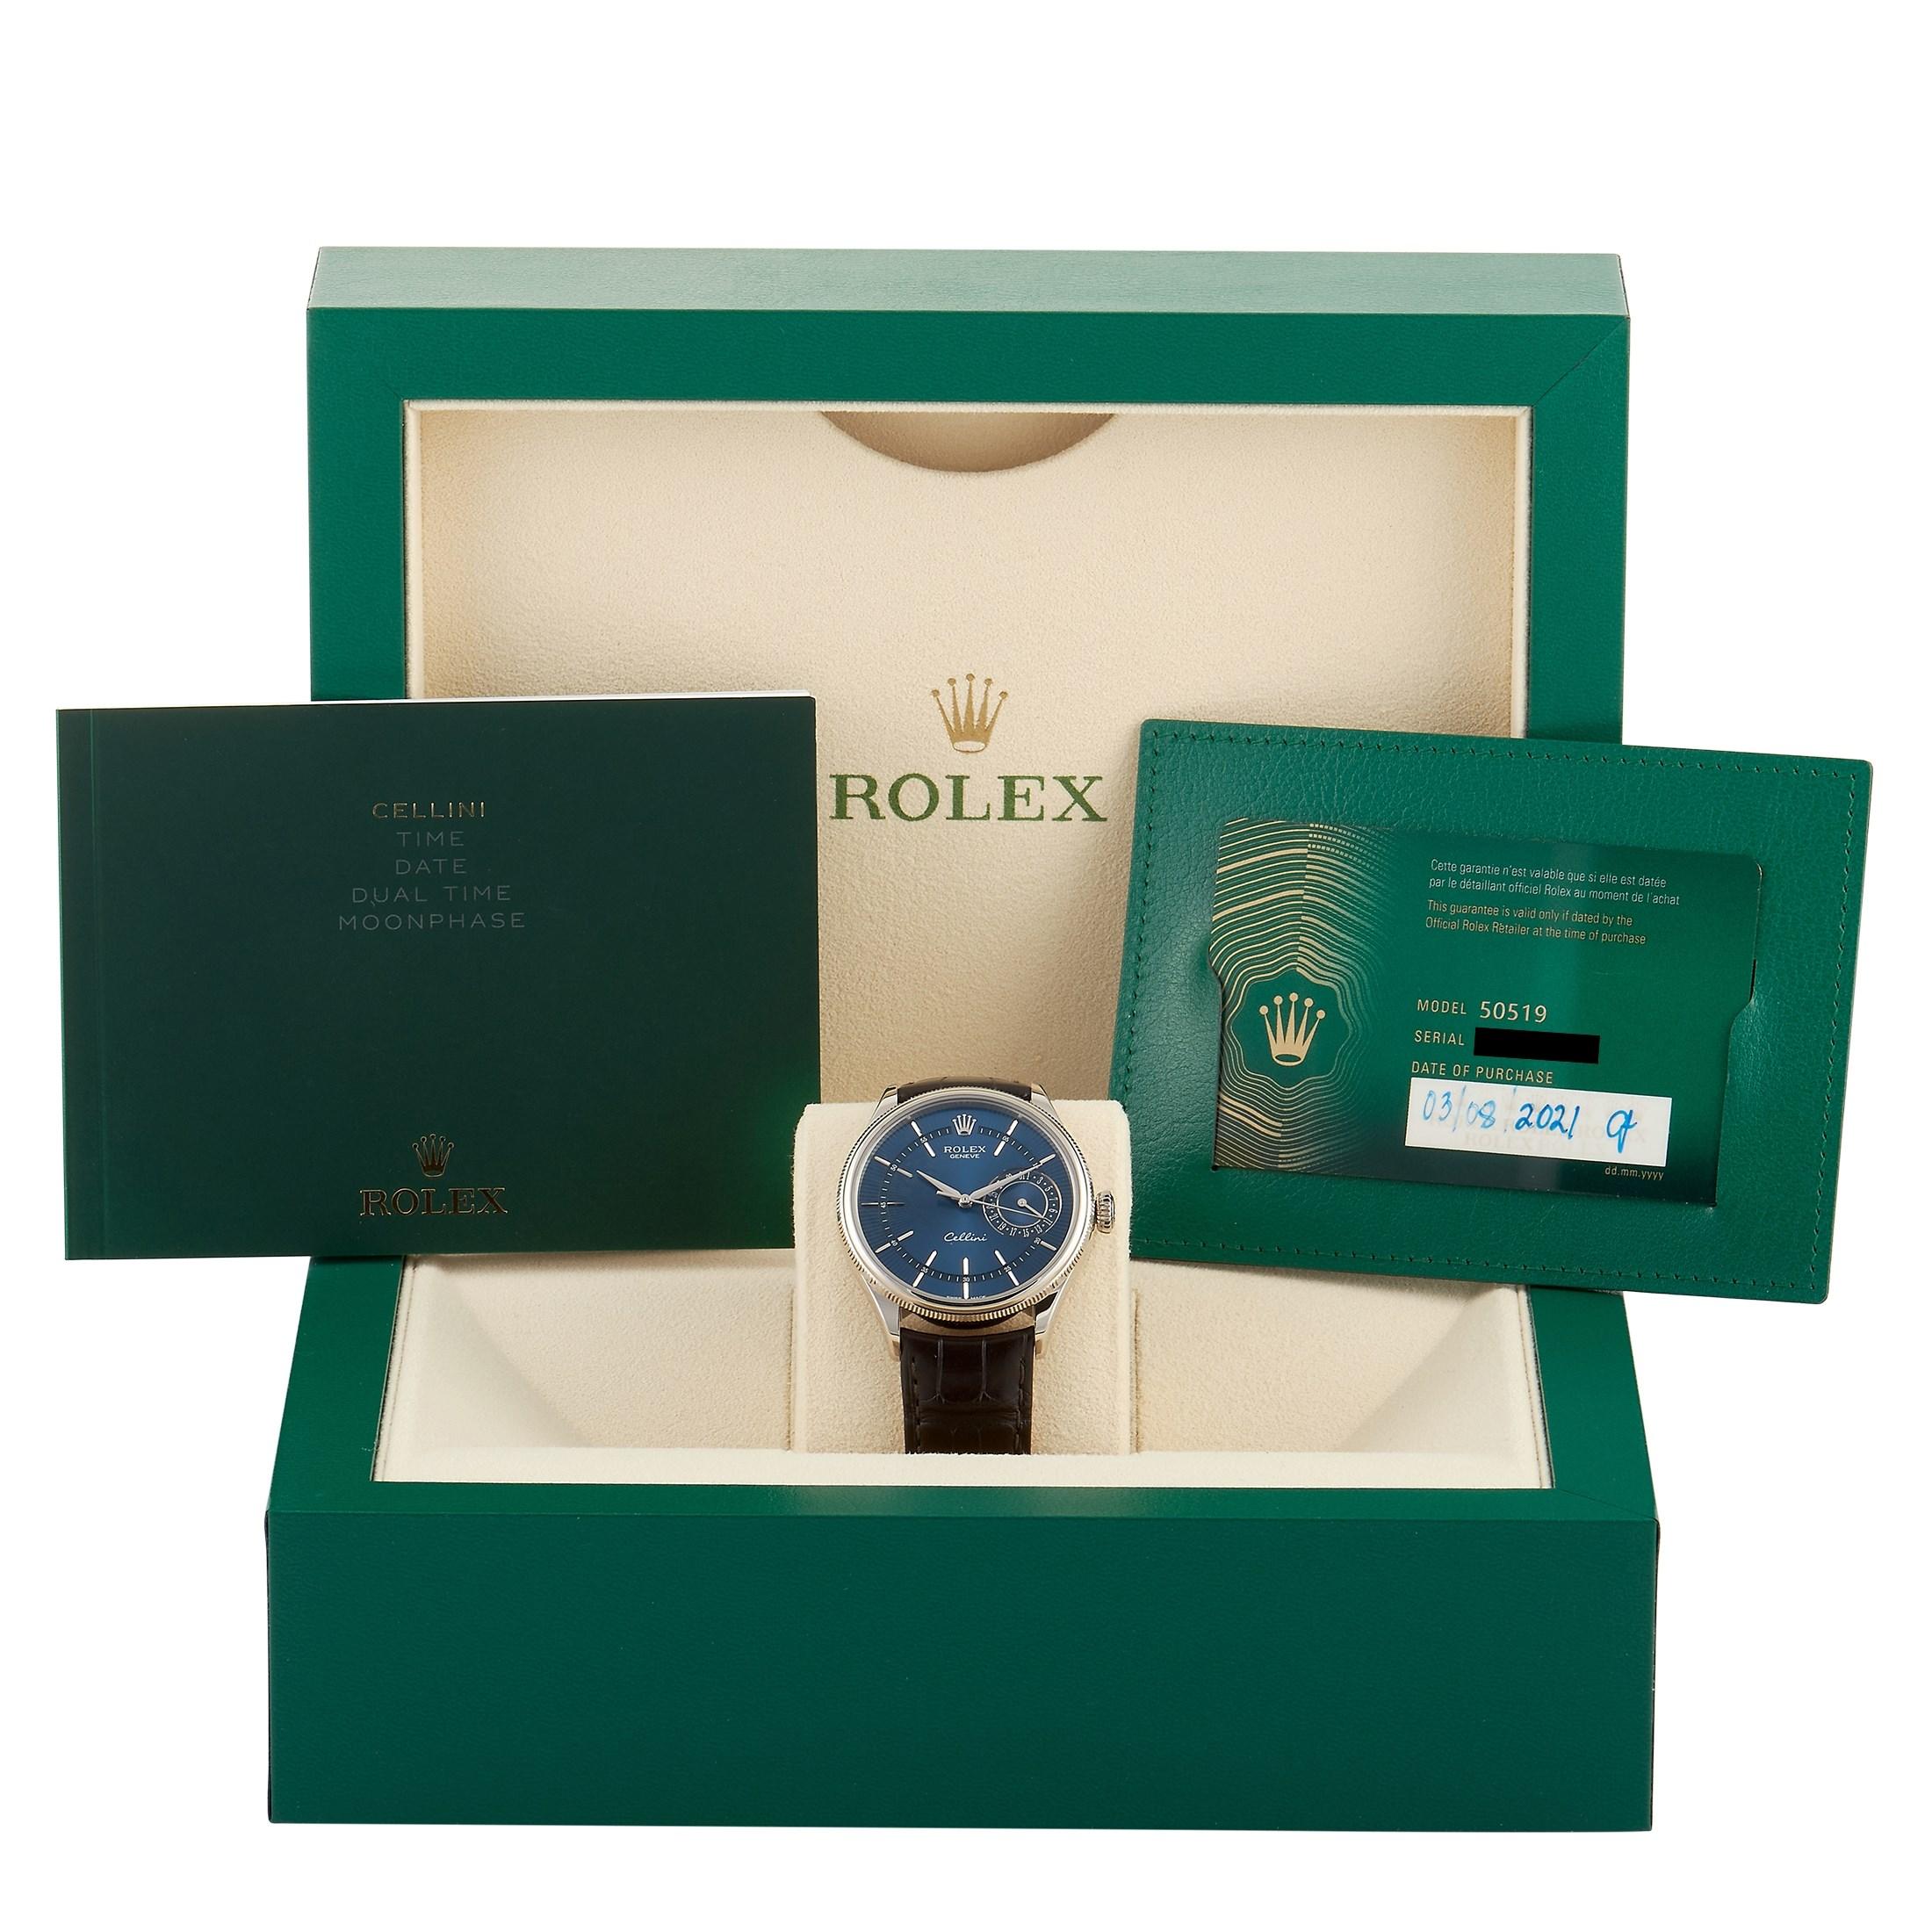 Rolex Cellini Date White Gold Watch 50519 1